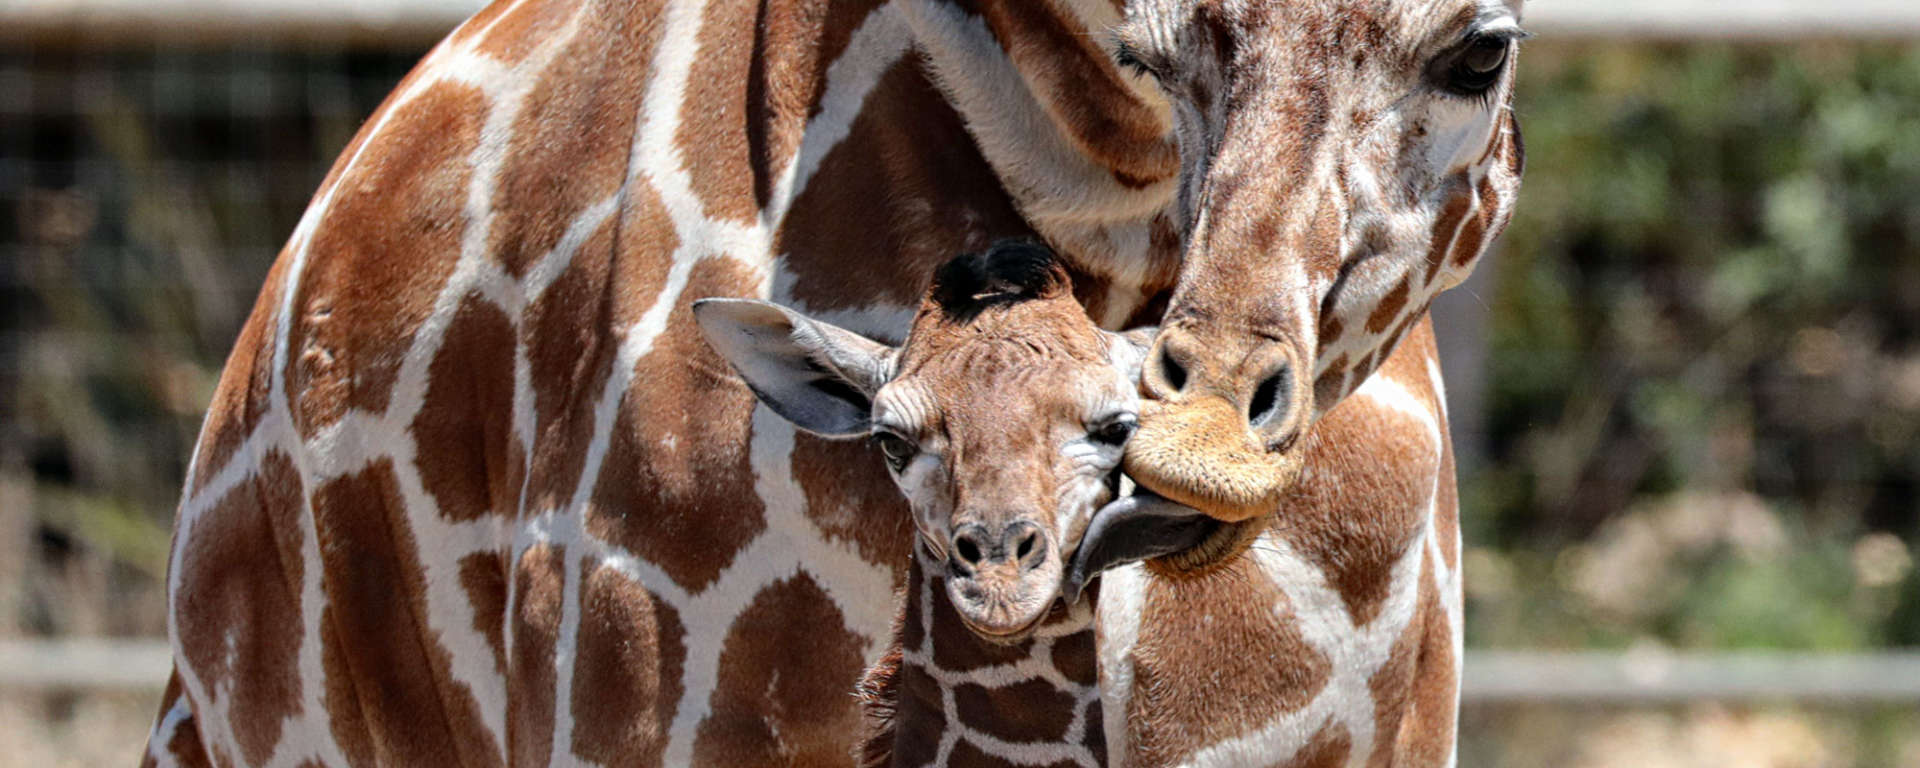 Baby Giraffe by Will Buquoy